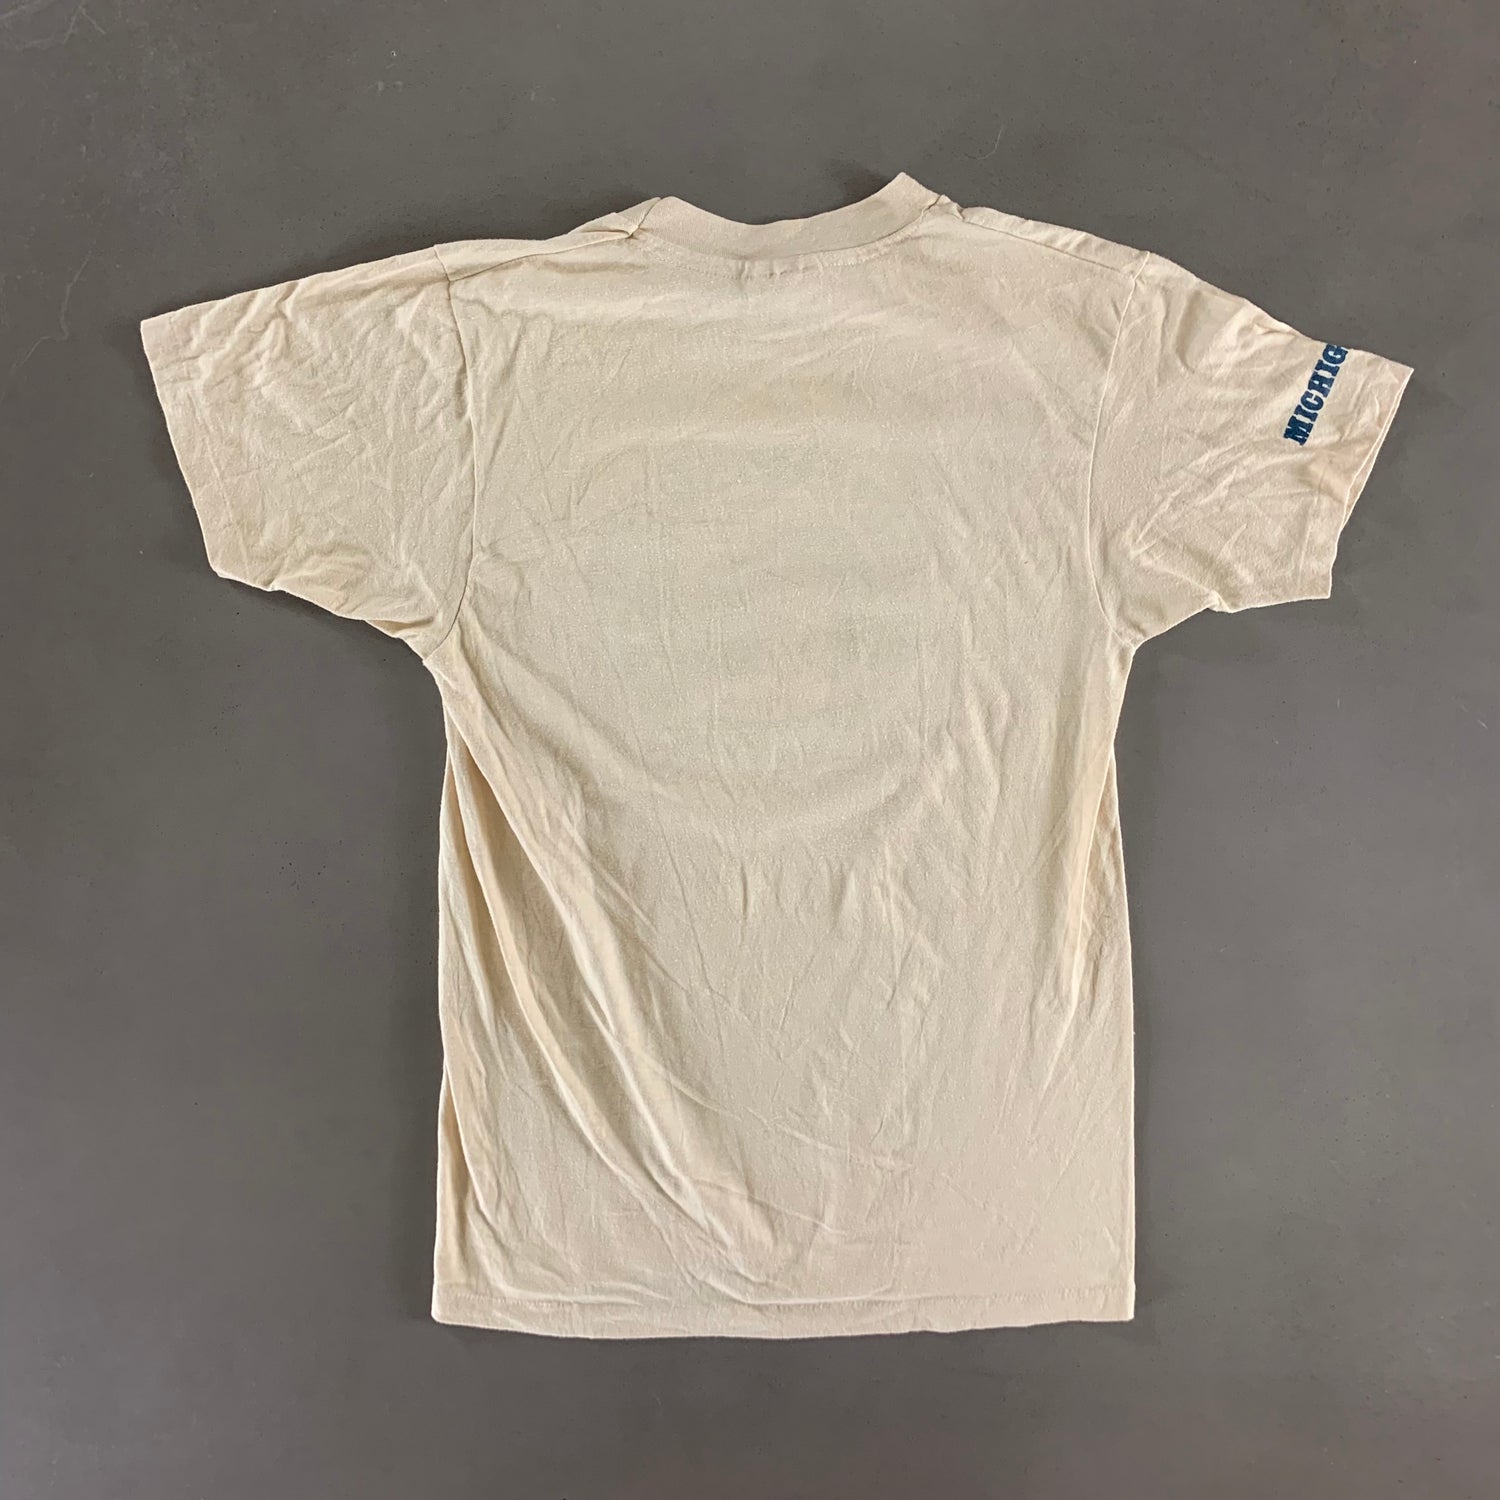 Vintage 1980s Vietnam Veterans T-shirt size Medium